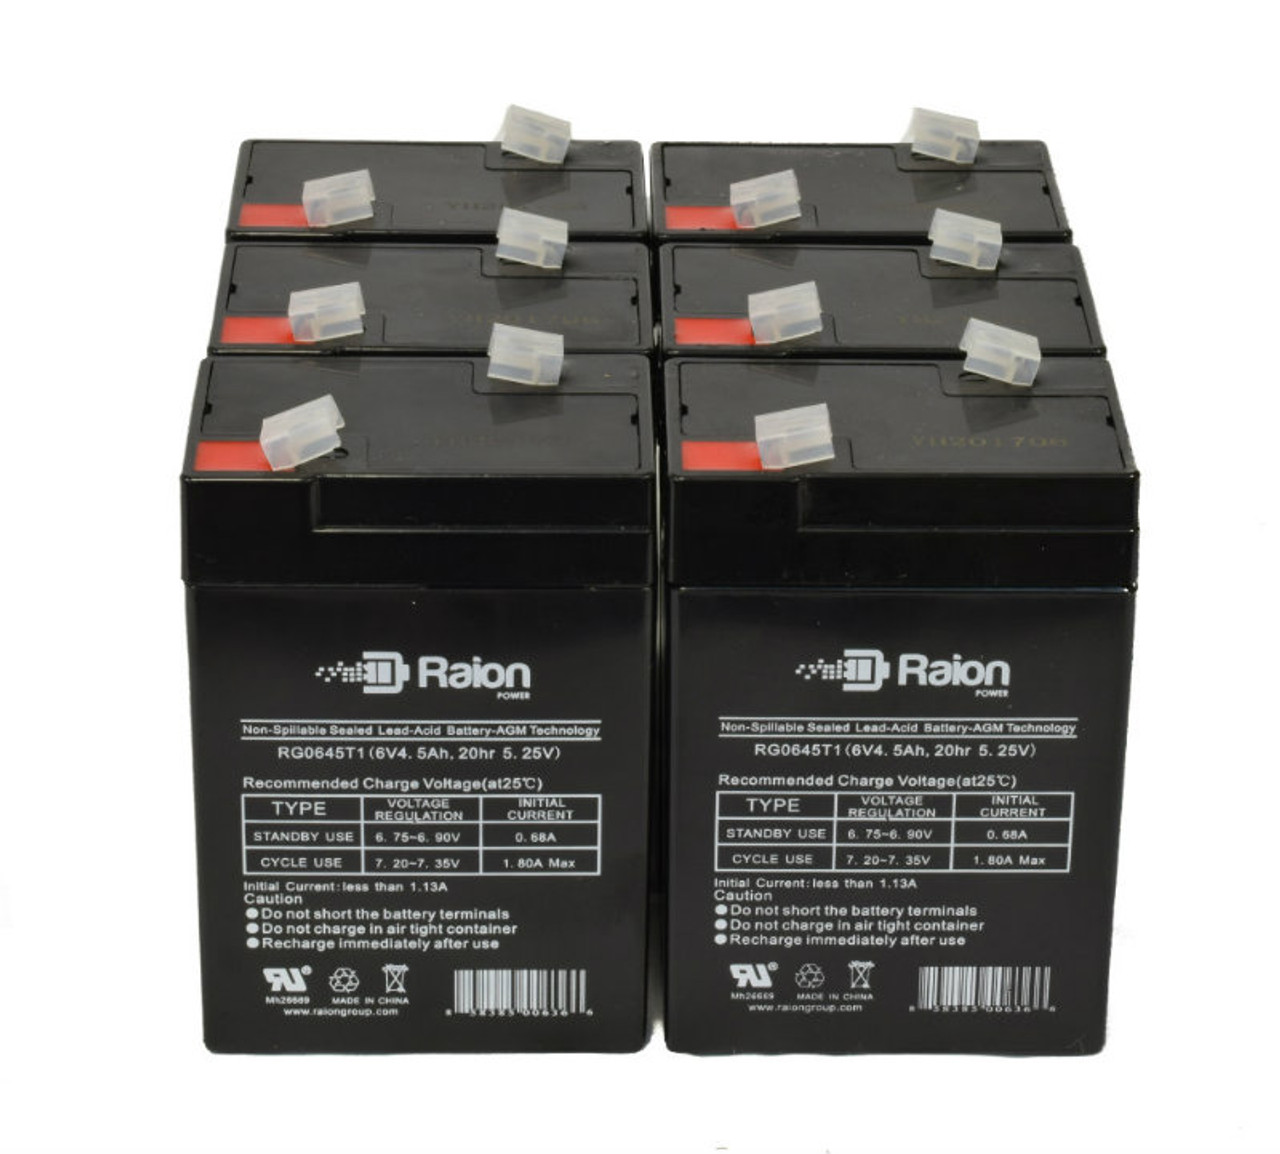 Raion Power 6V 4.5Ah Replacement Emergency Light Battery for Sonnenschein SSG - 6 Pack